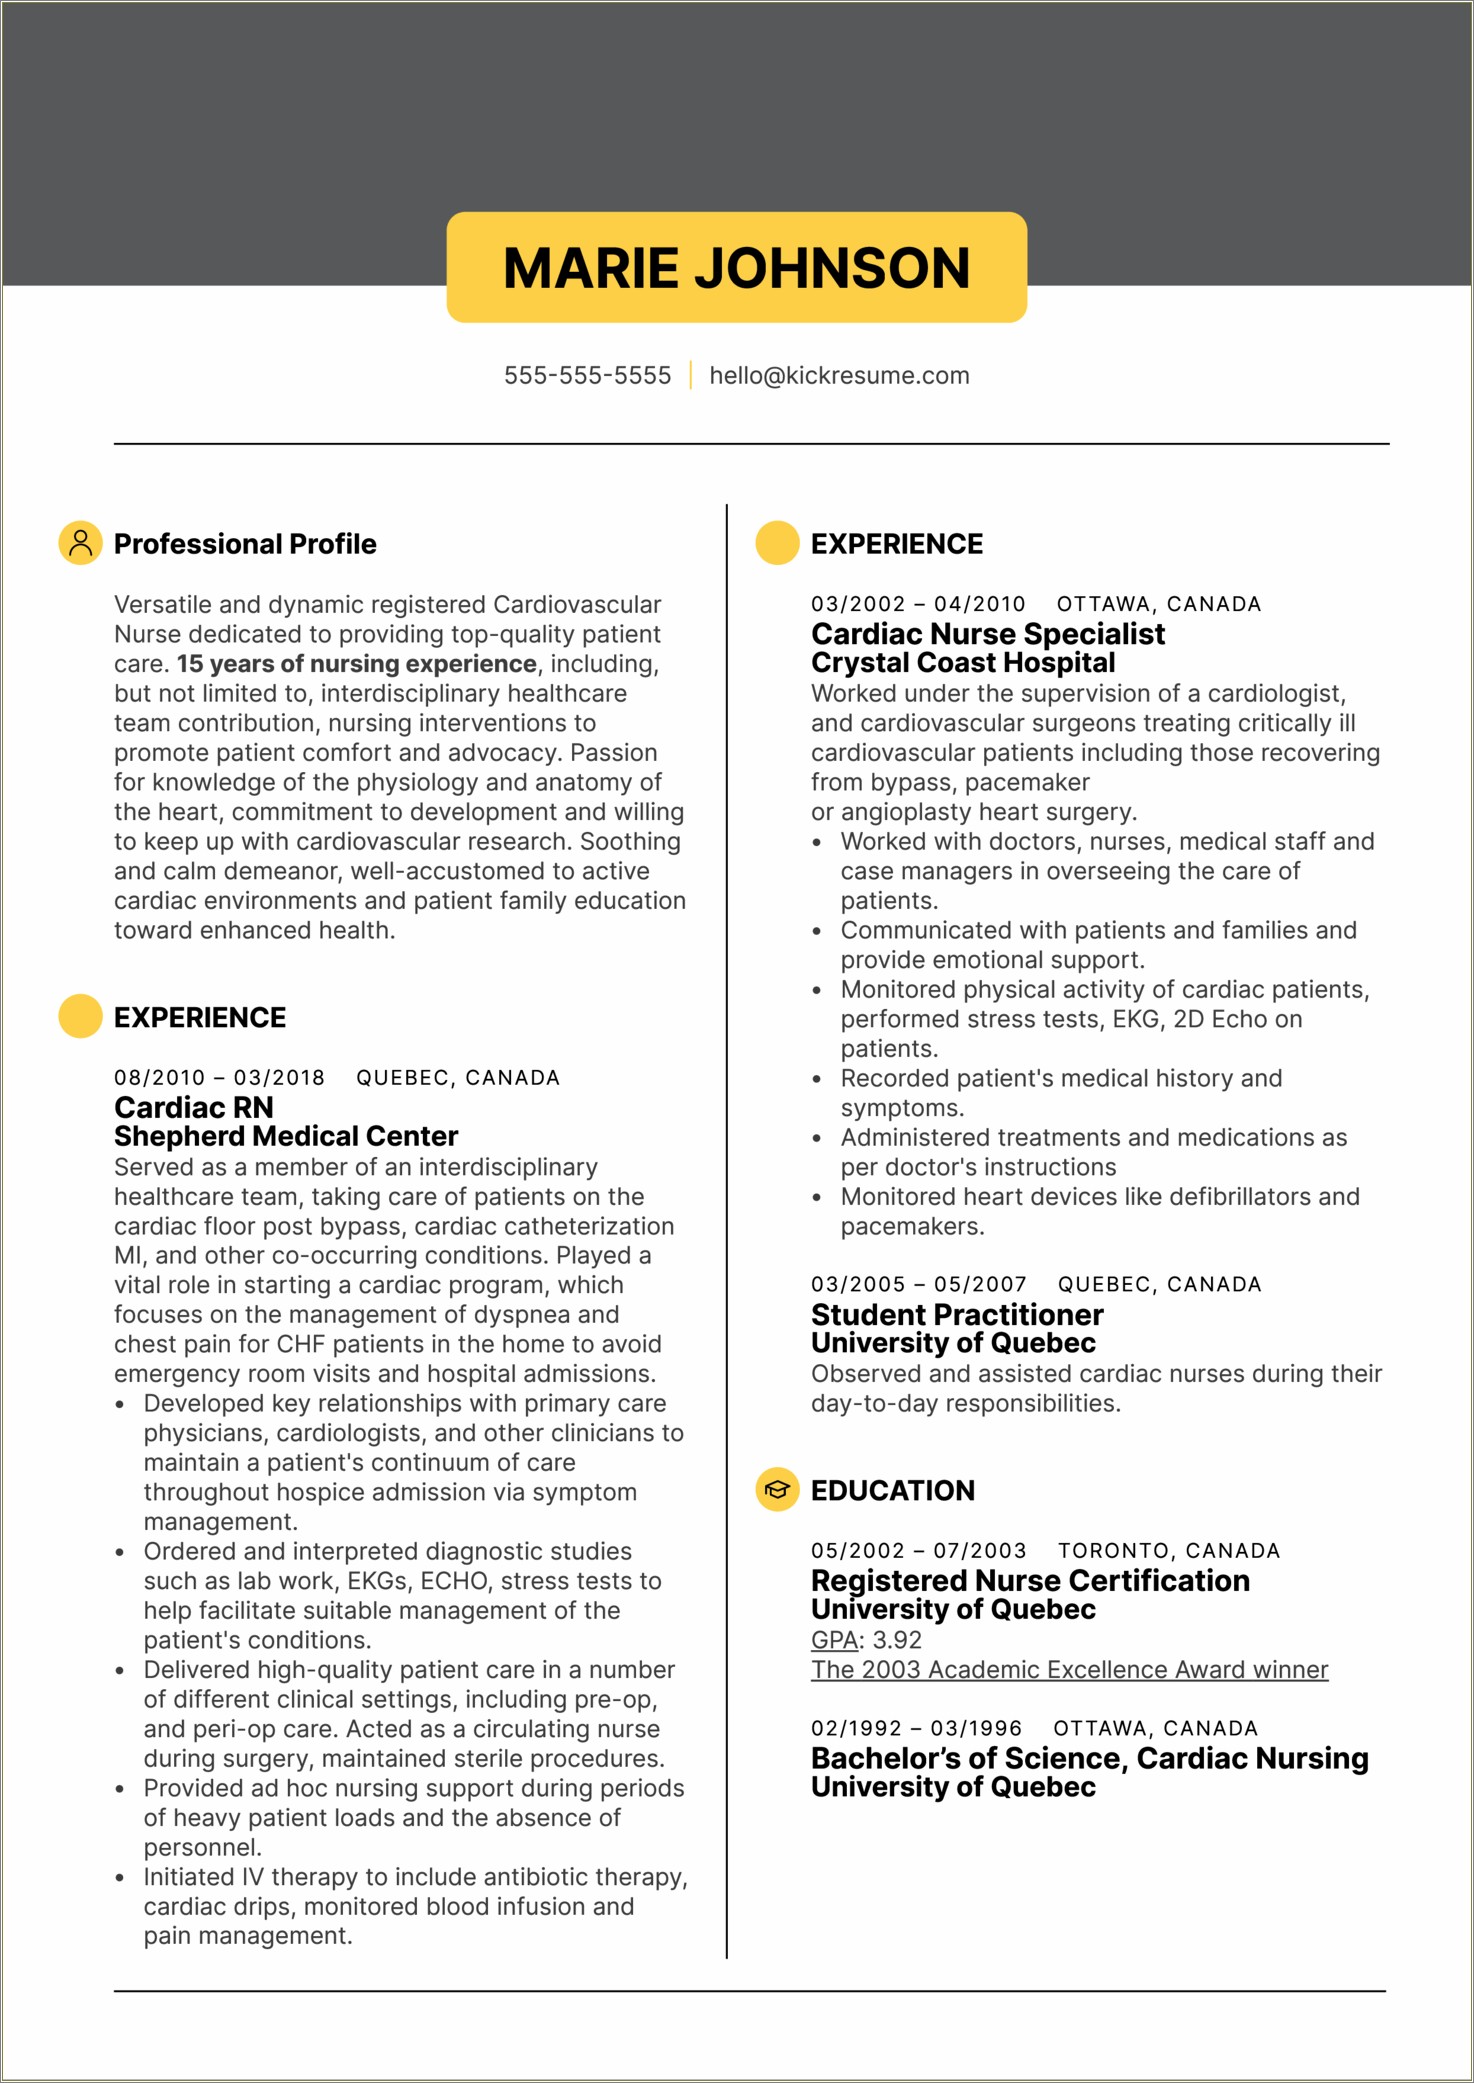 Sample Career Profile Resume For Nurses